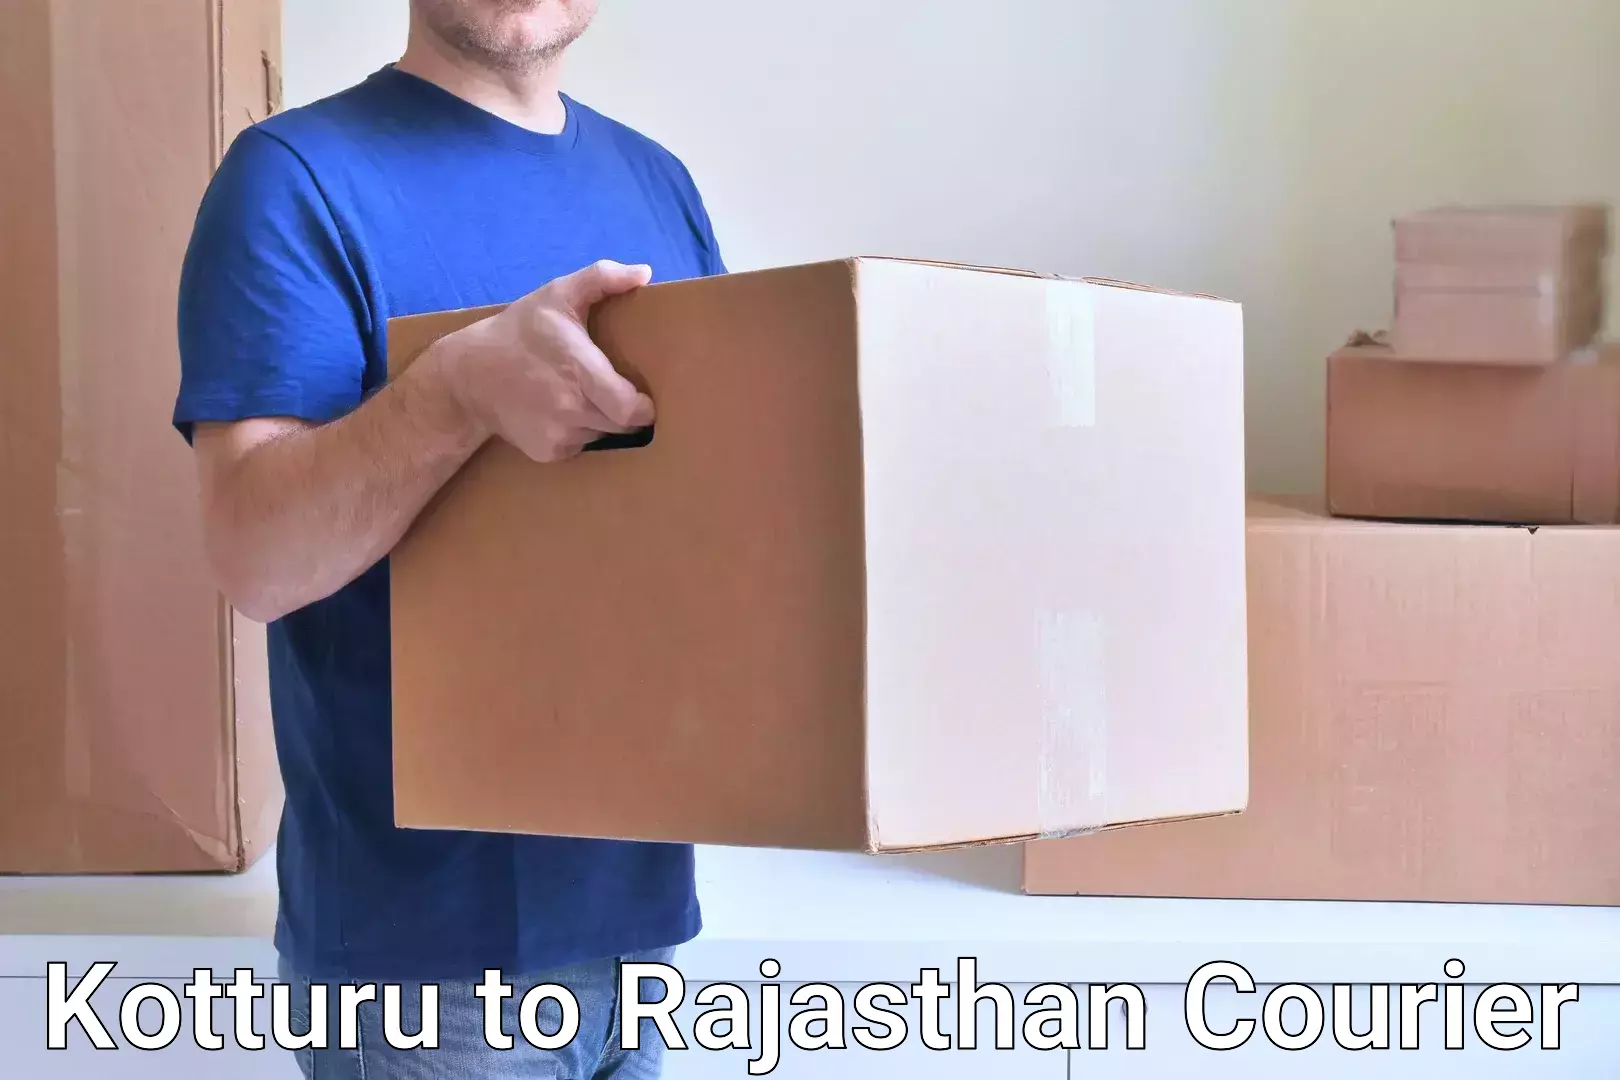 Courier service innovation in Kotturu to Rajasthan